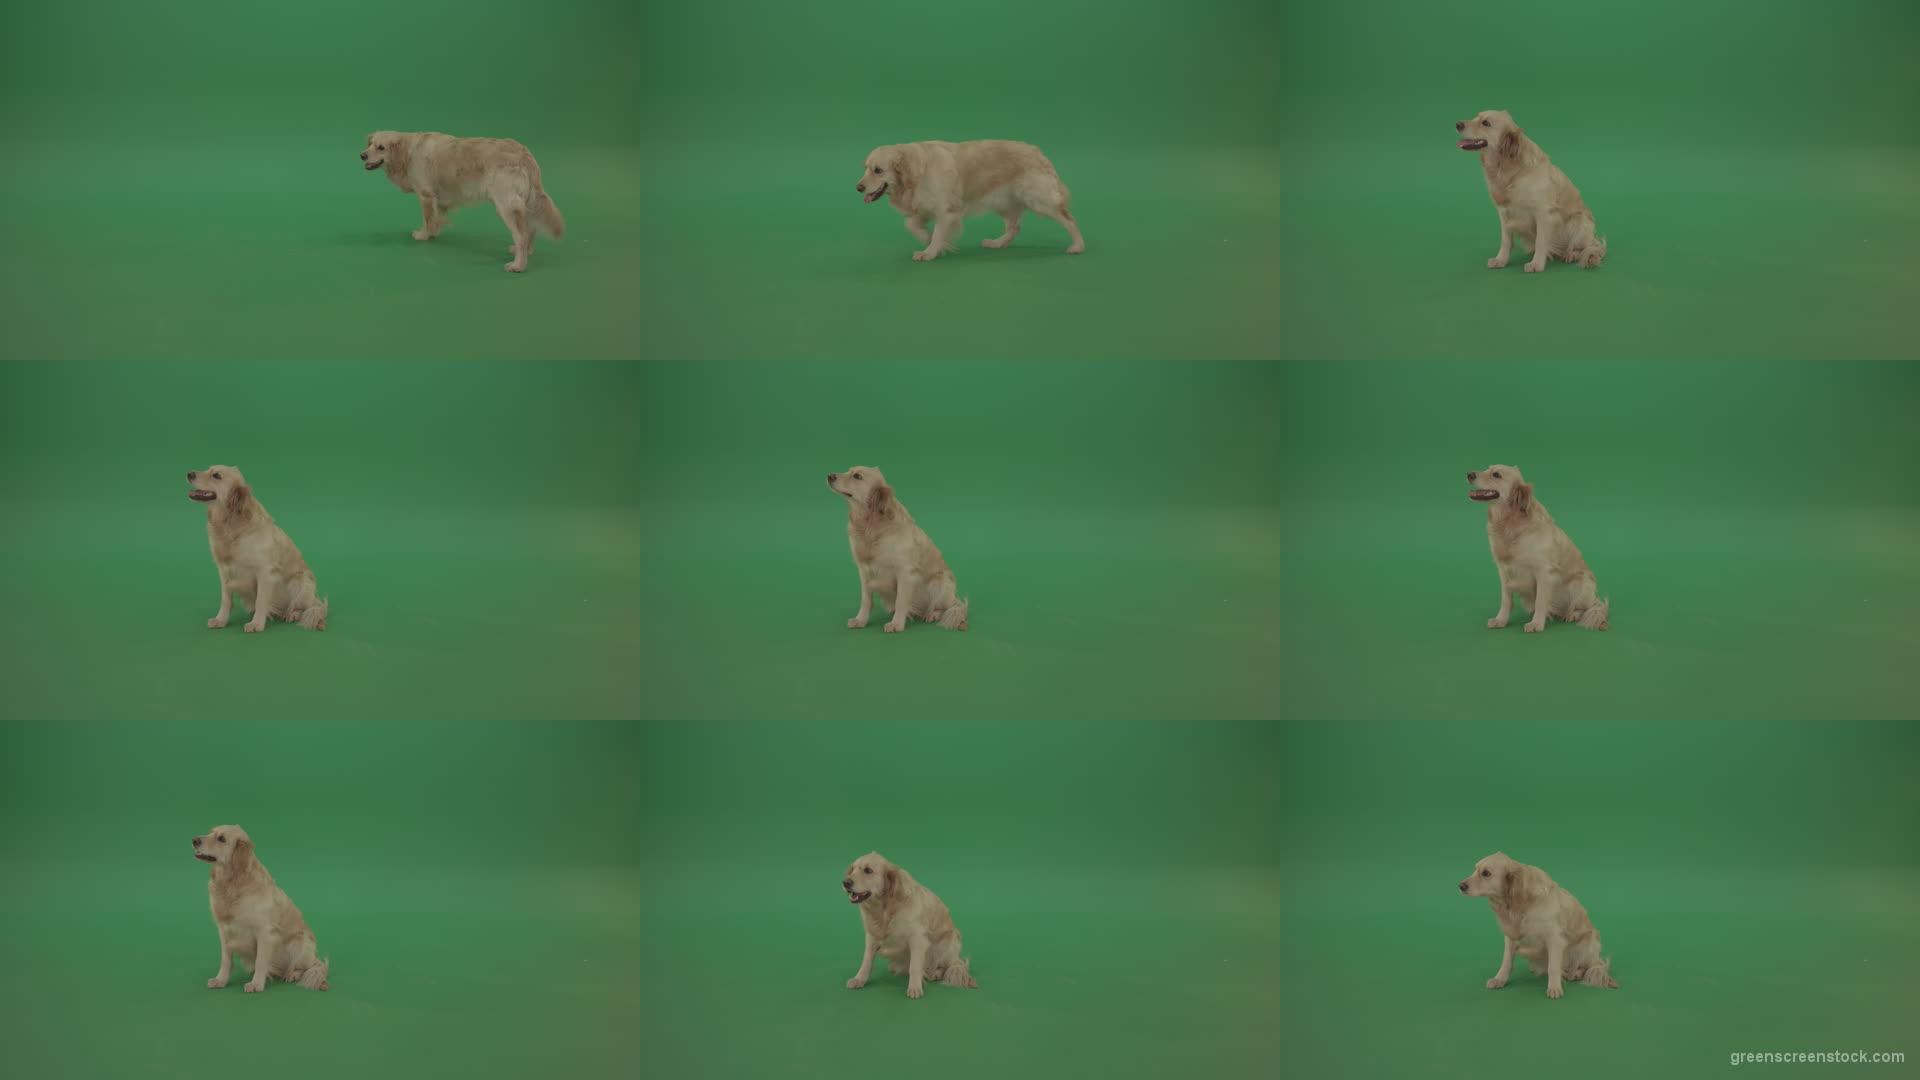 Golden-Retriever-Gun-Dog-sittin-and-eat-isolated-on-green-screen-4K-video-footage Green Screen Stock